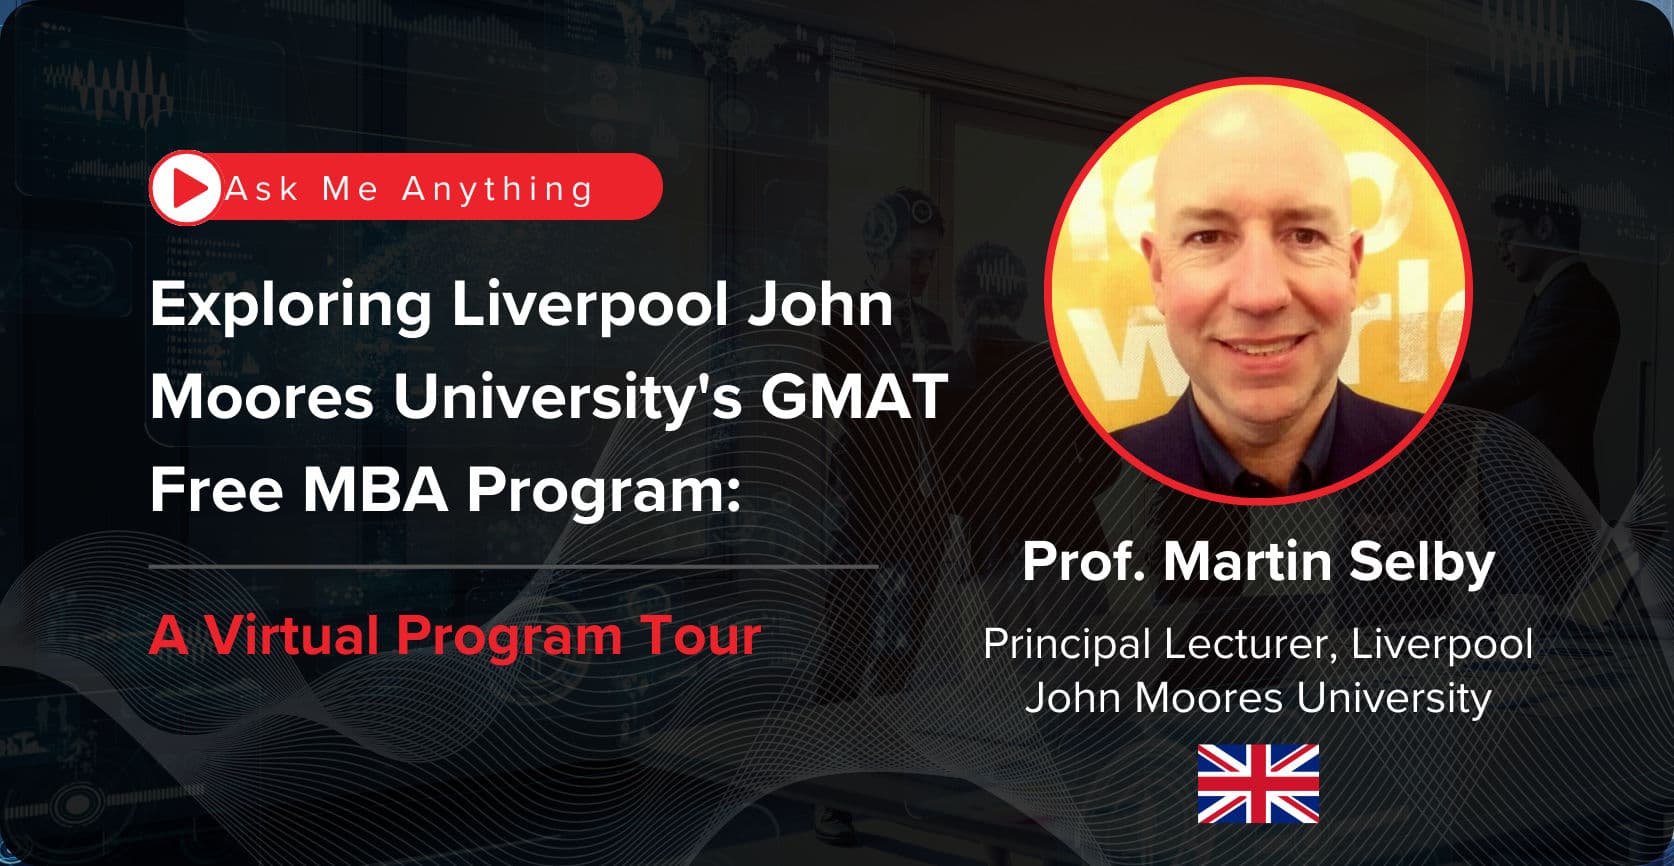 Exploring Liverpool John Moores University's GMAT free MBA program